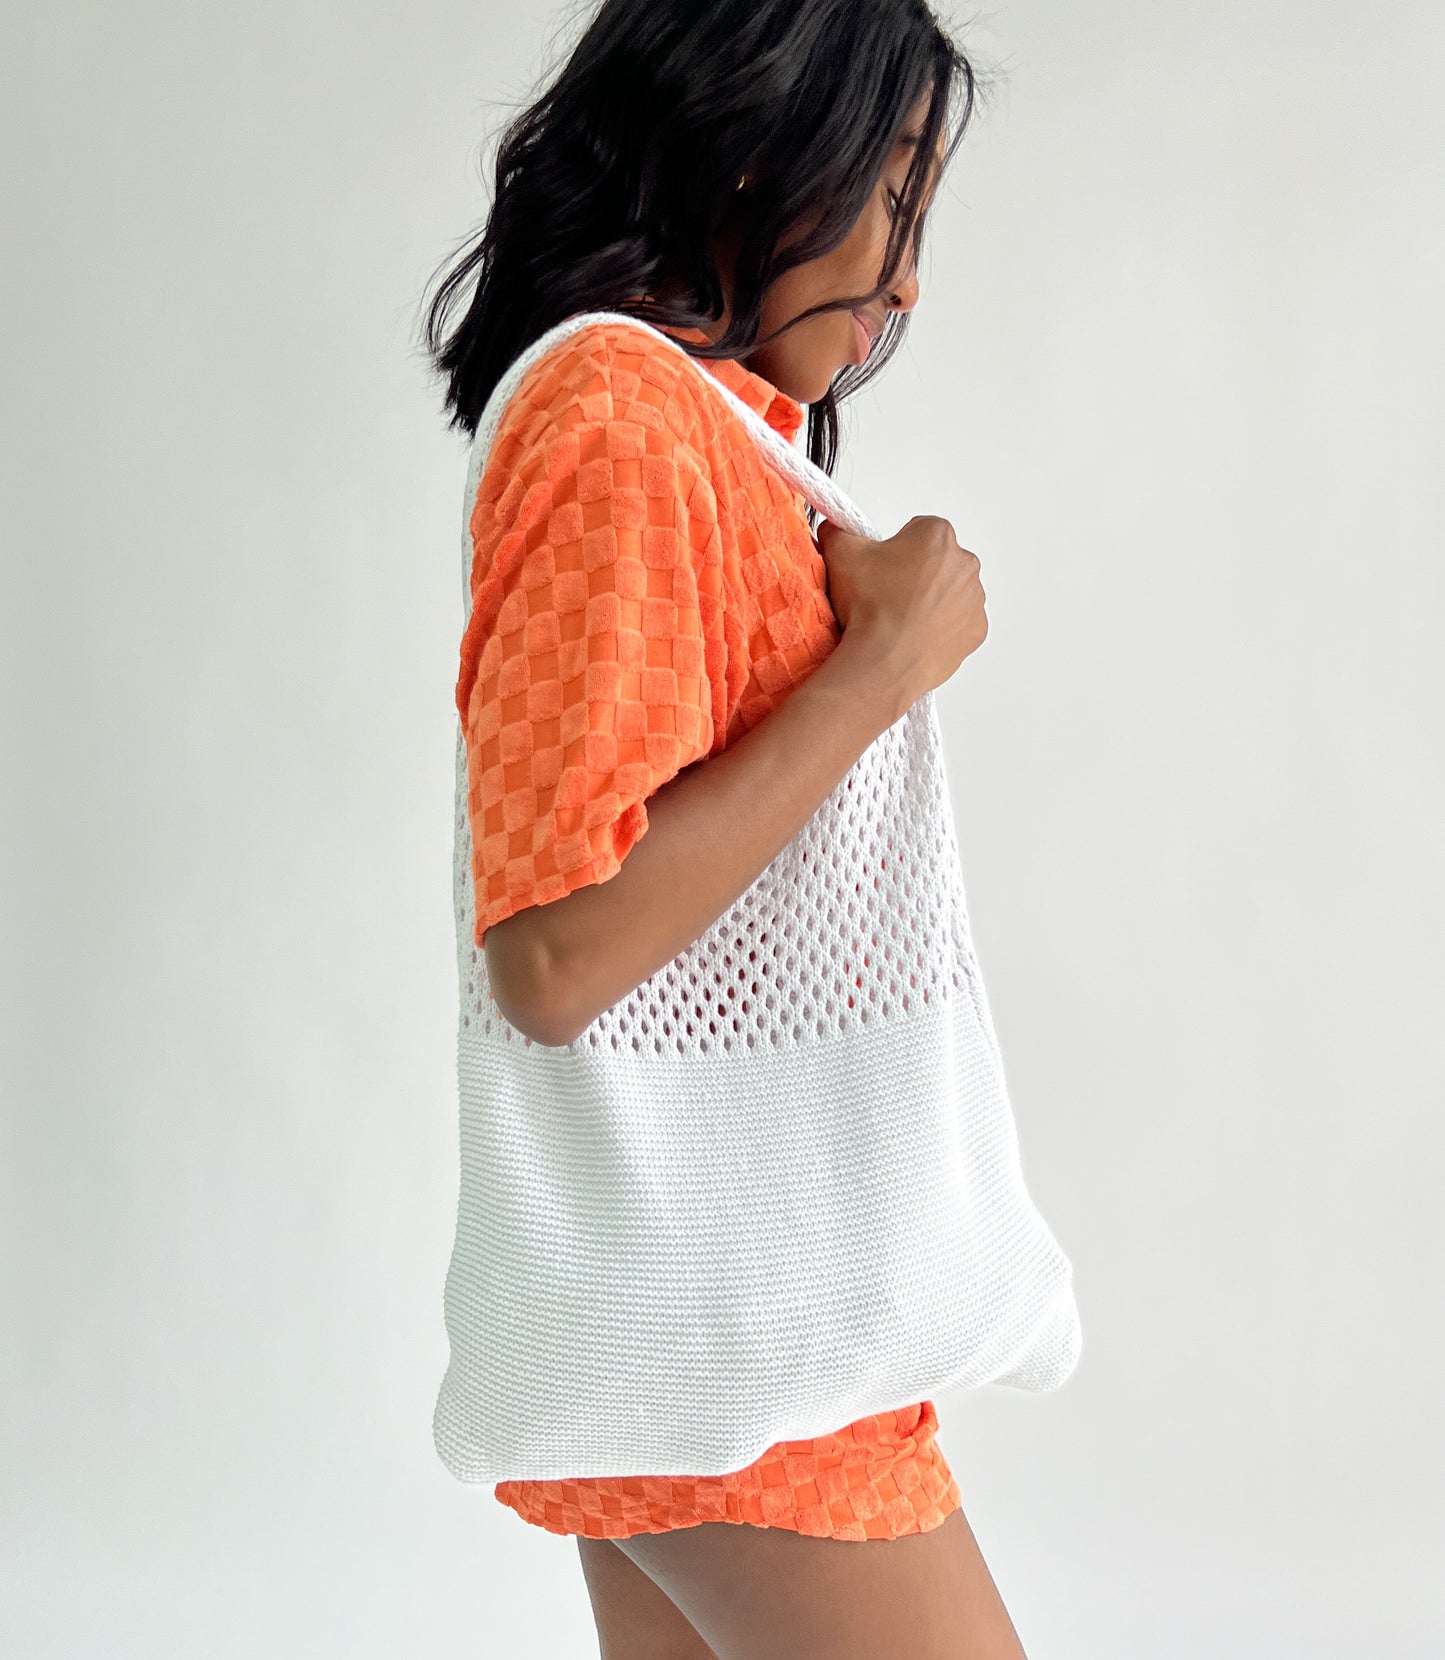 Seaside Knit Tote Bag // White